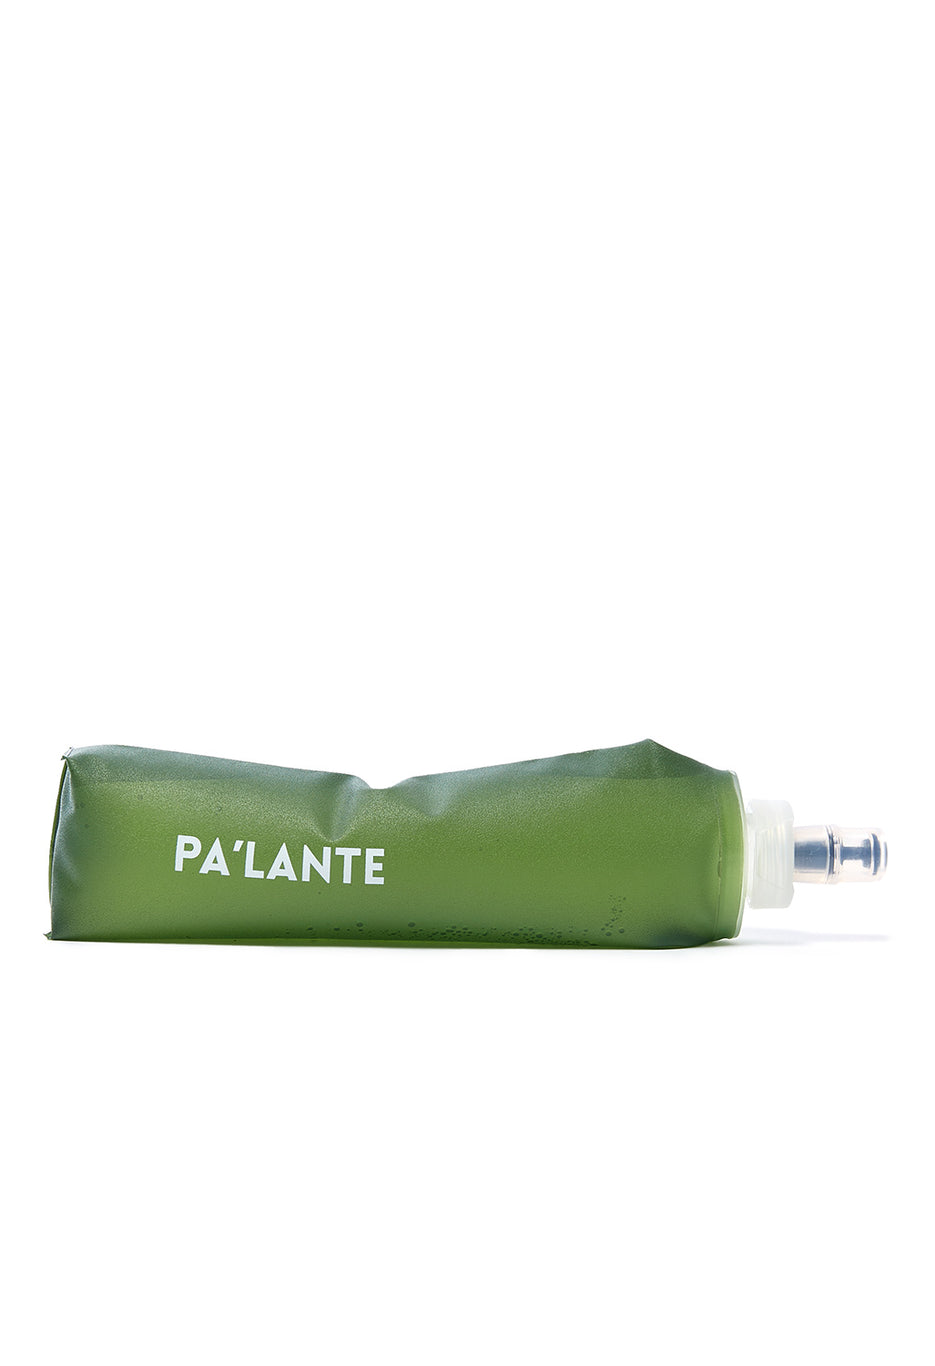 Pa'lante Packs Narrow Water Bottle - Green